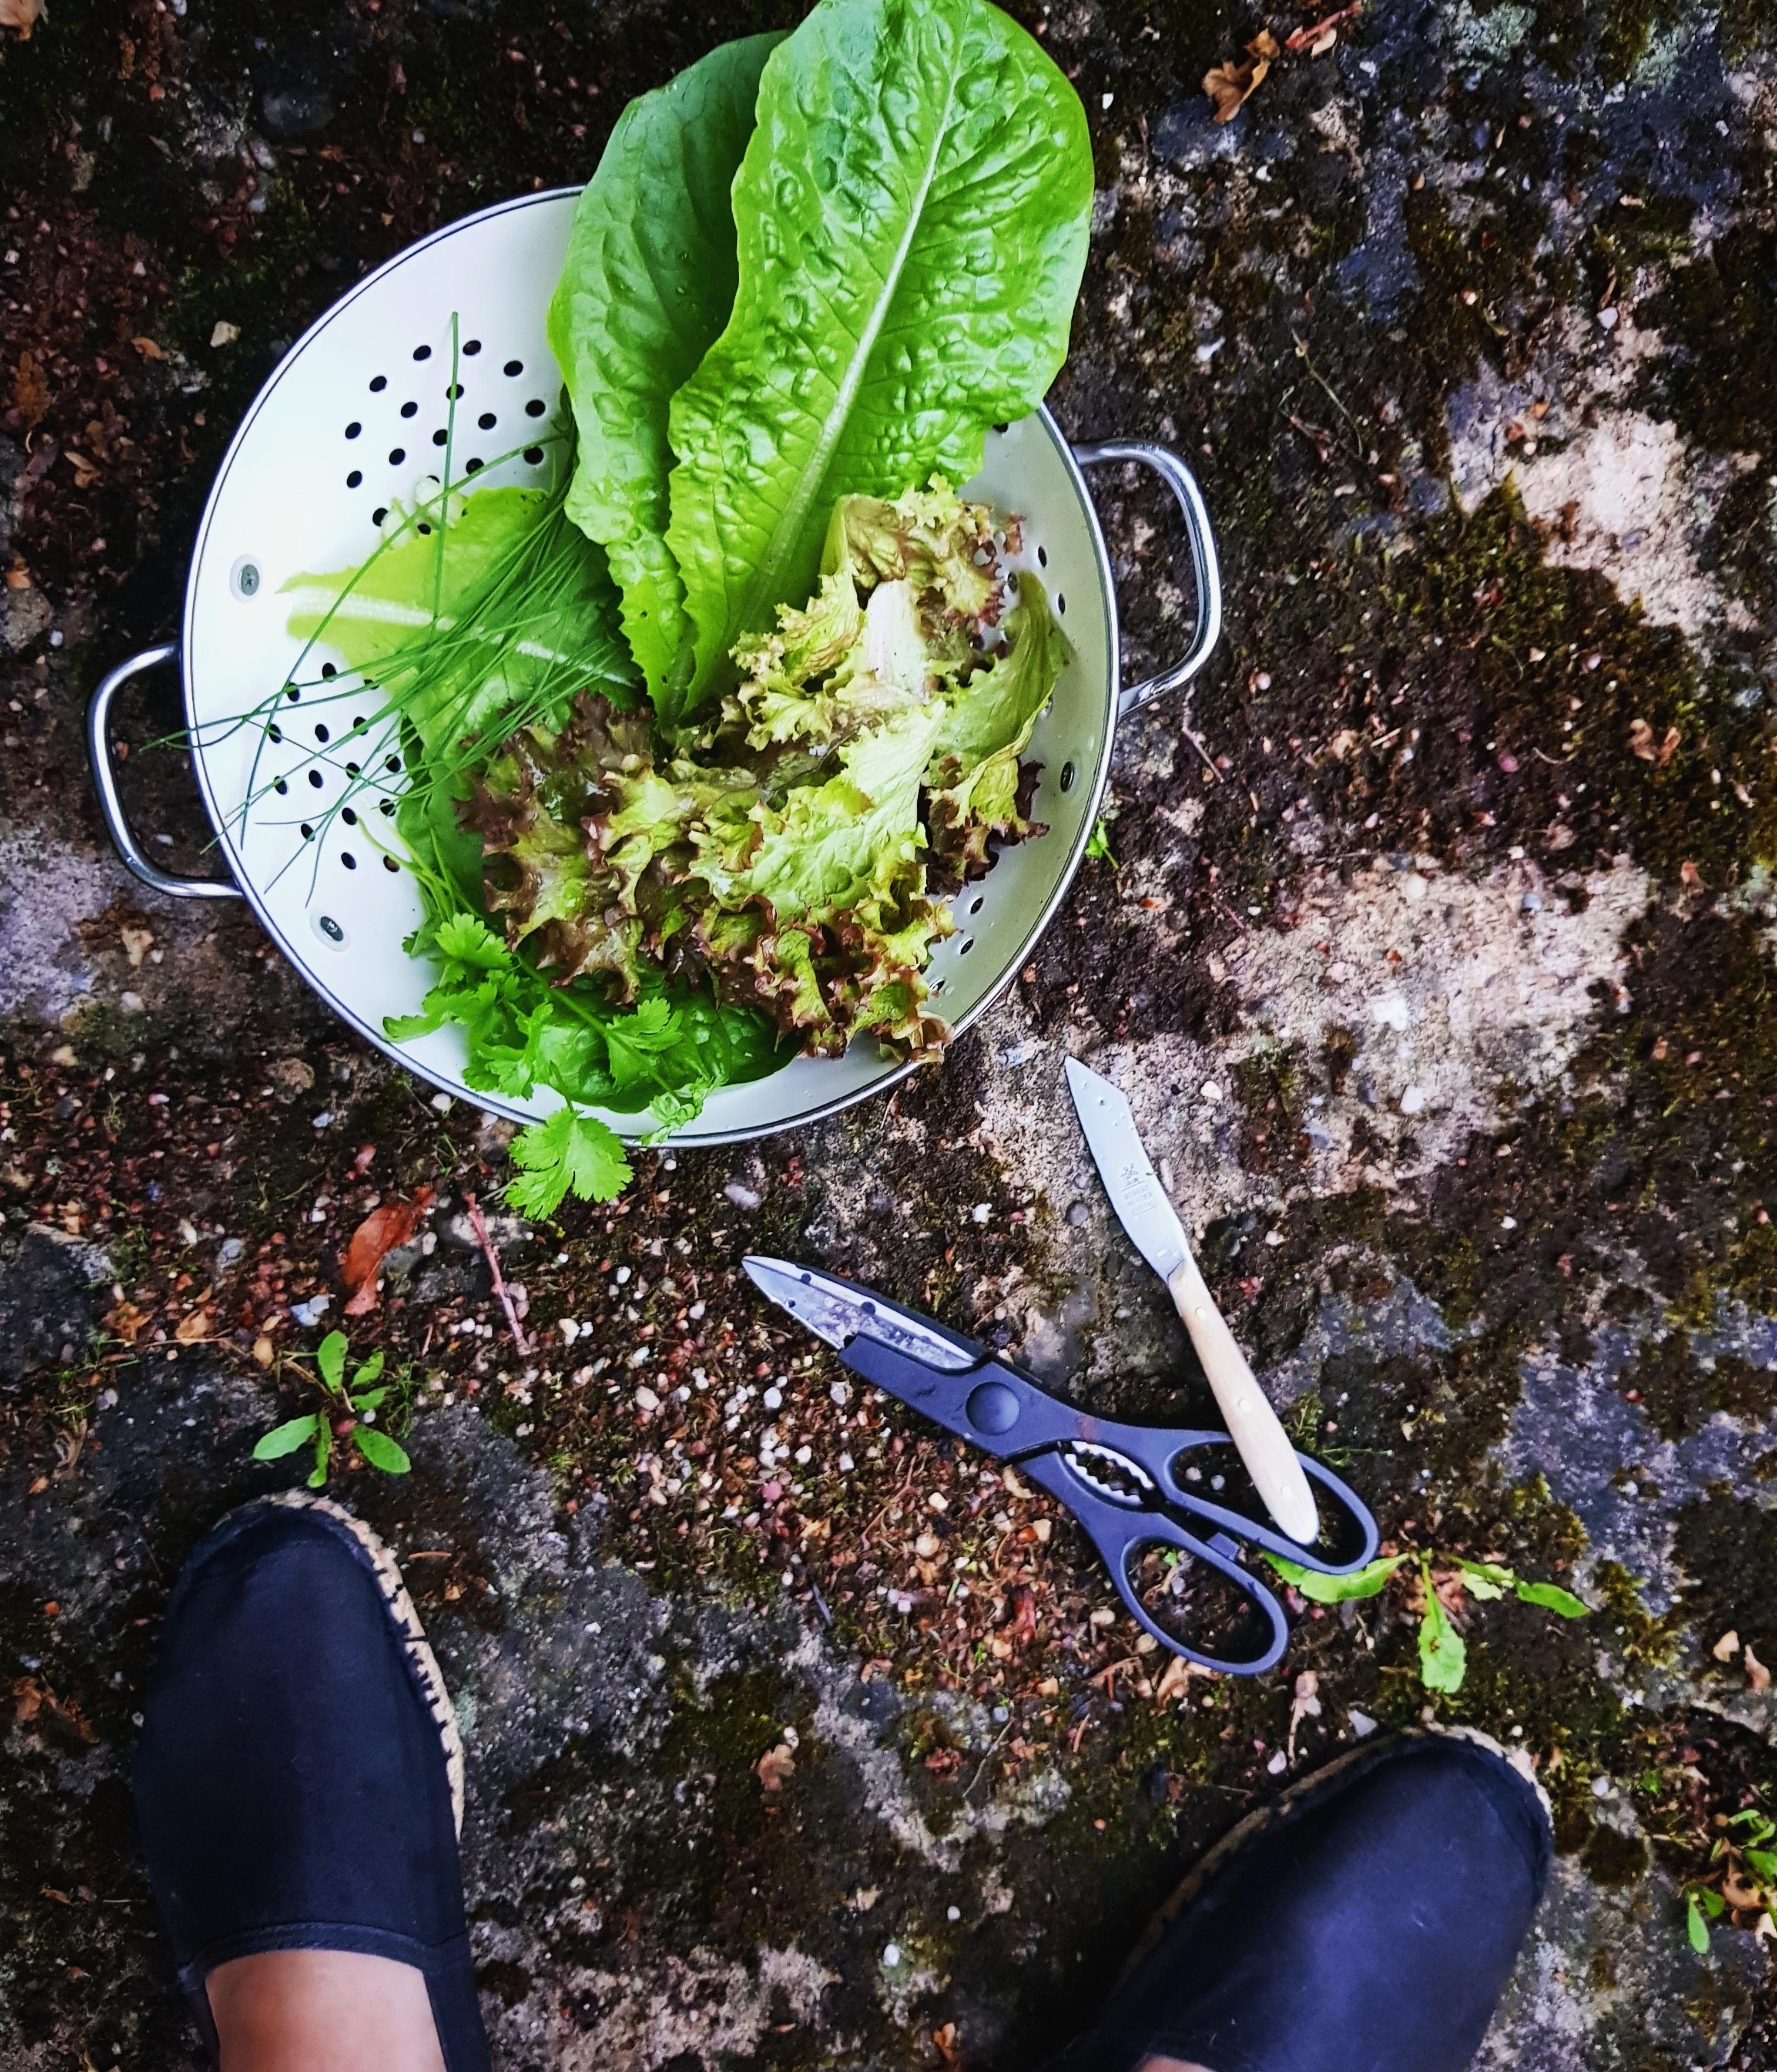 Juhuu, erste Ernte! #Salat #Hochbeet #Garten 